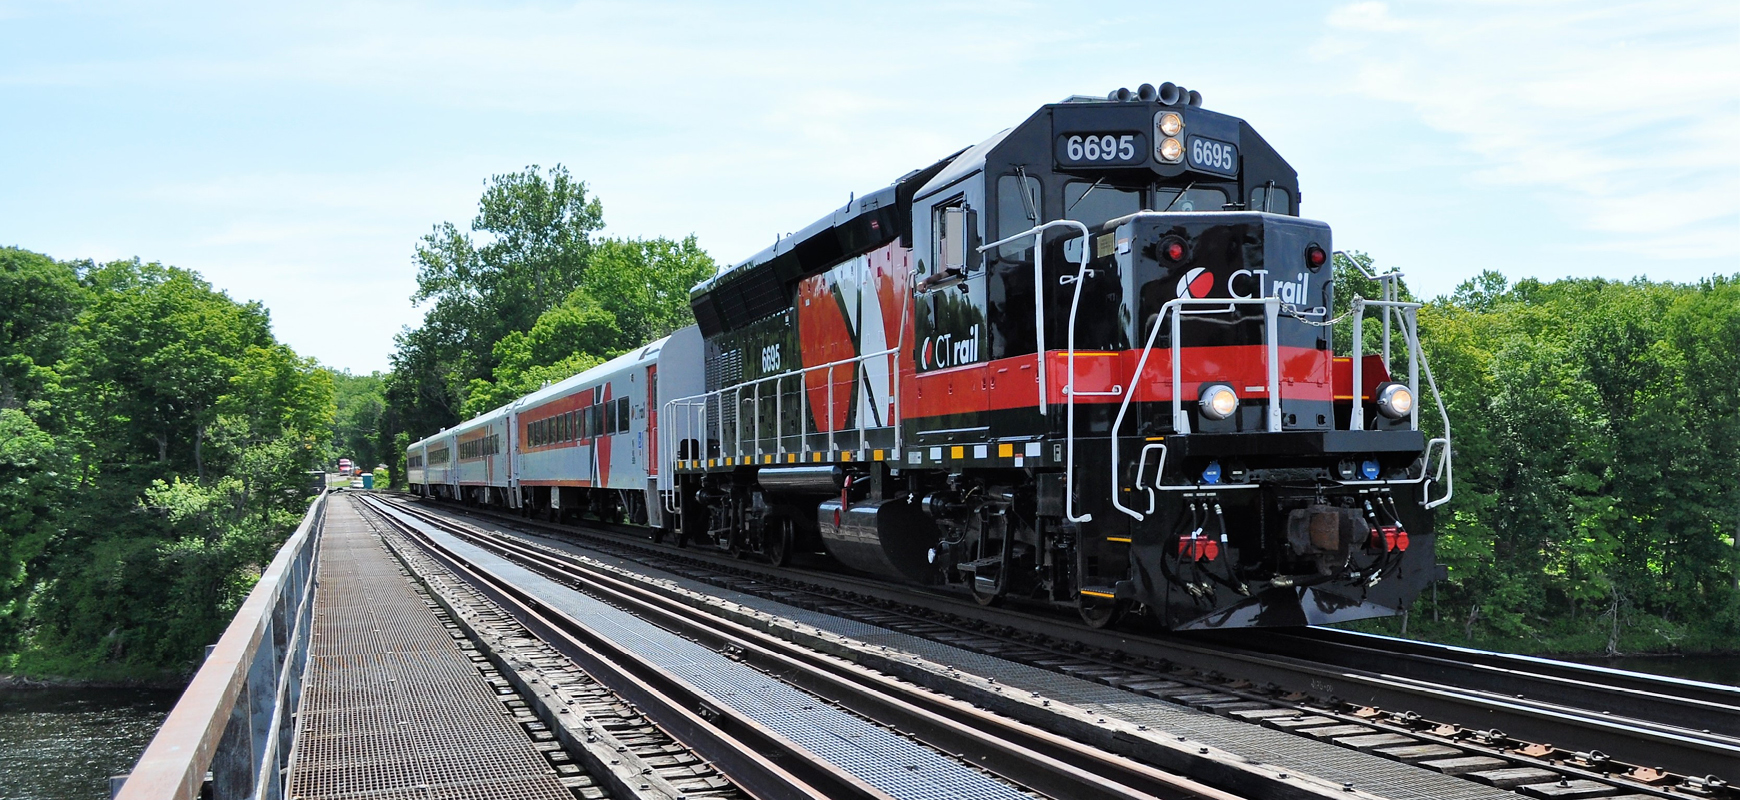 The CTrail Hartford Line